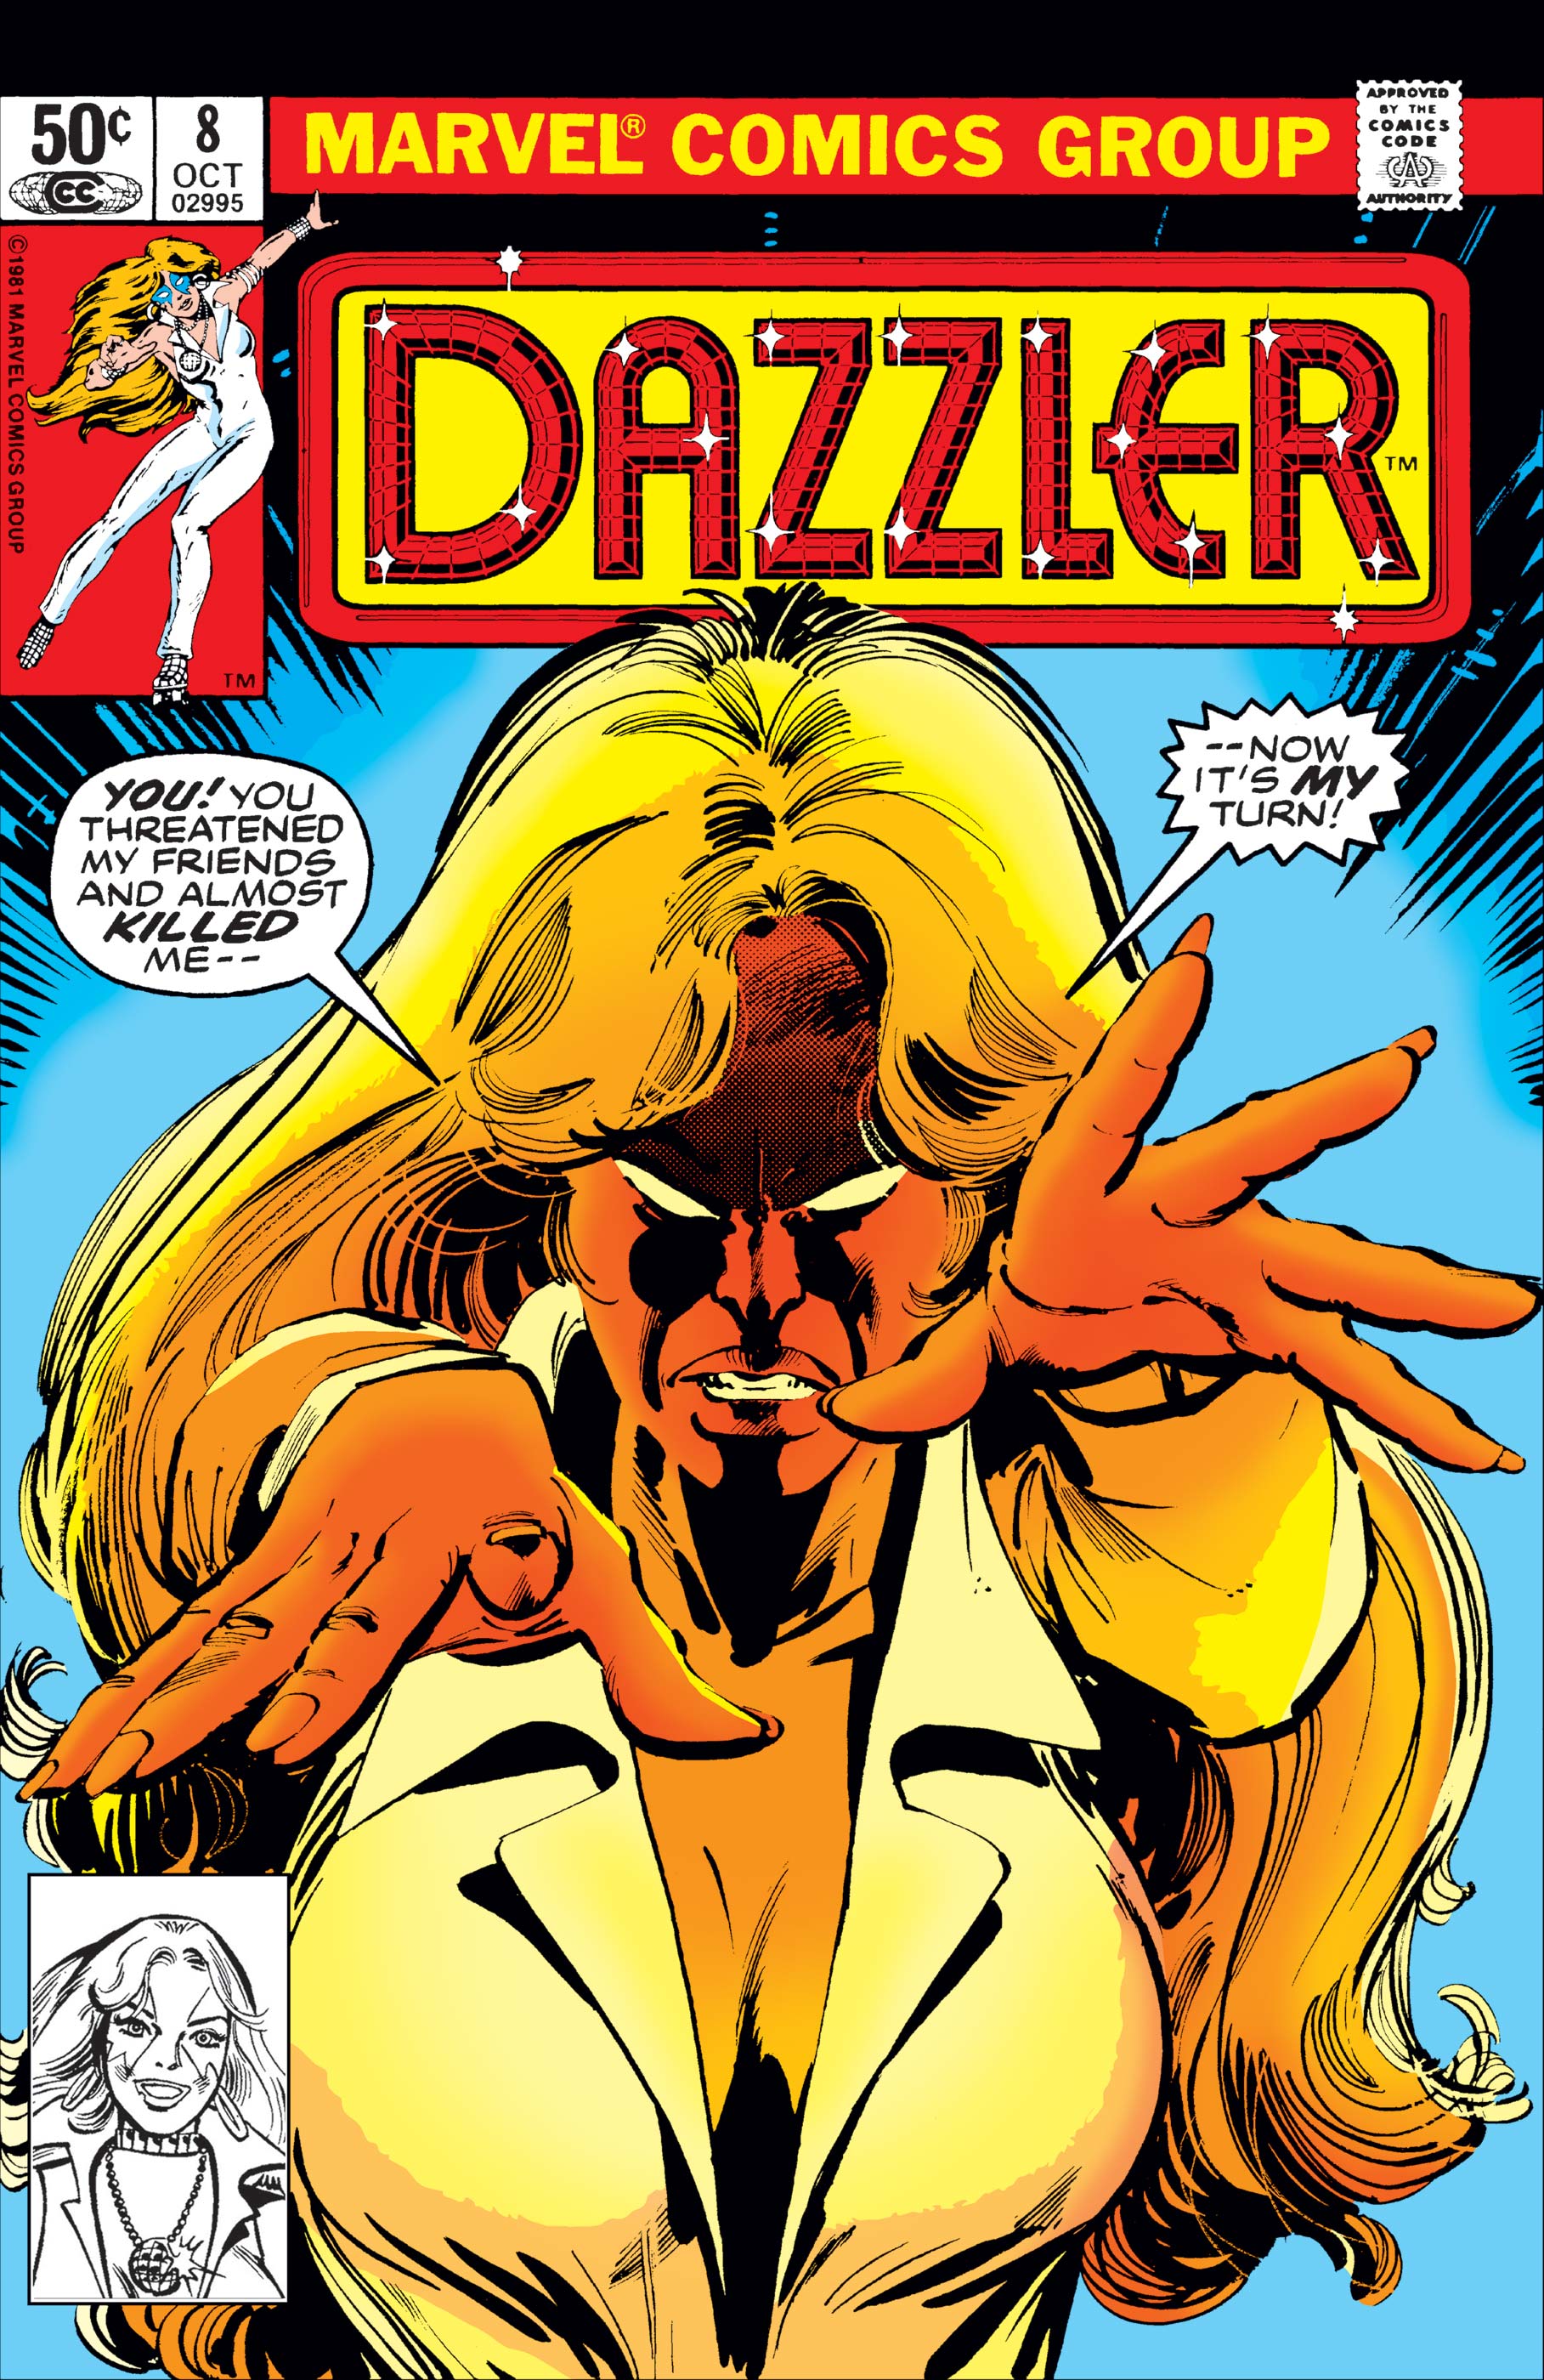 Dazzler (Marvel Comics) - Wikipedia